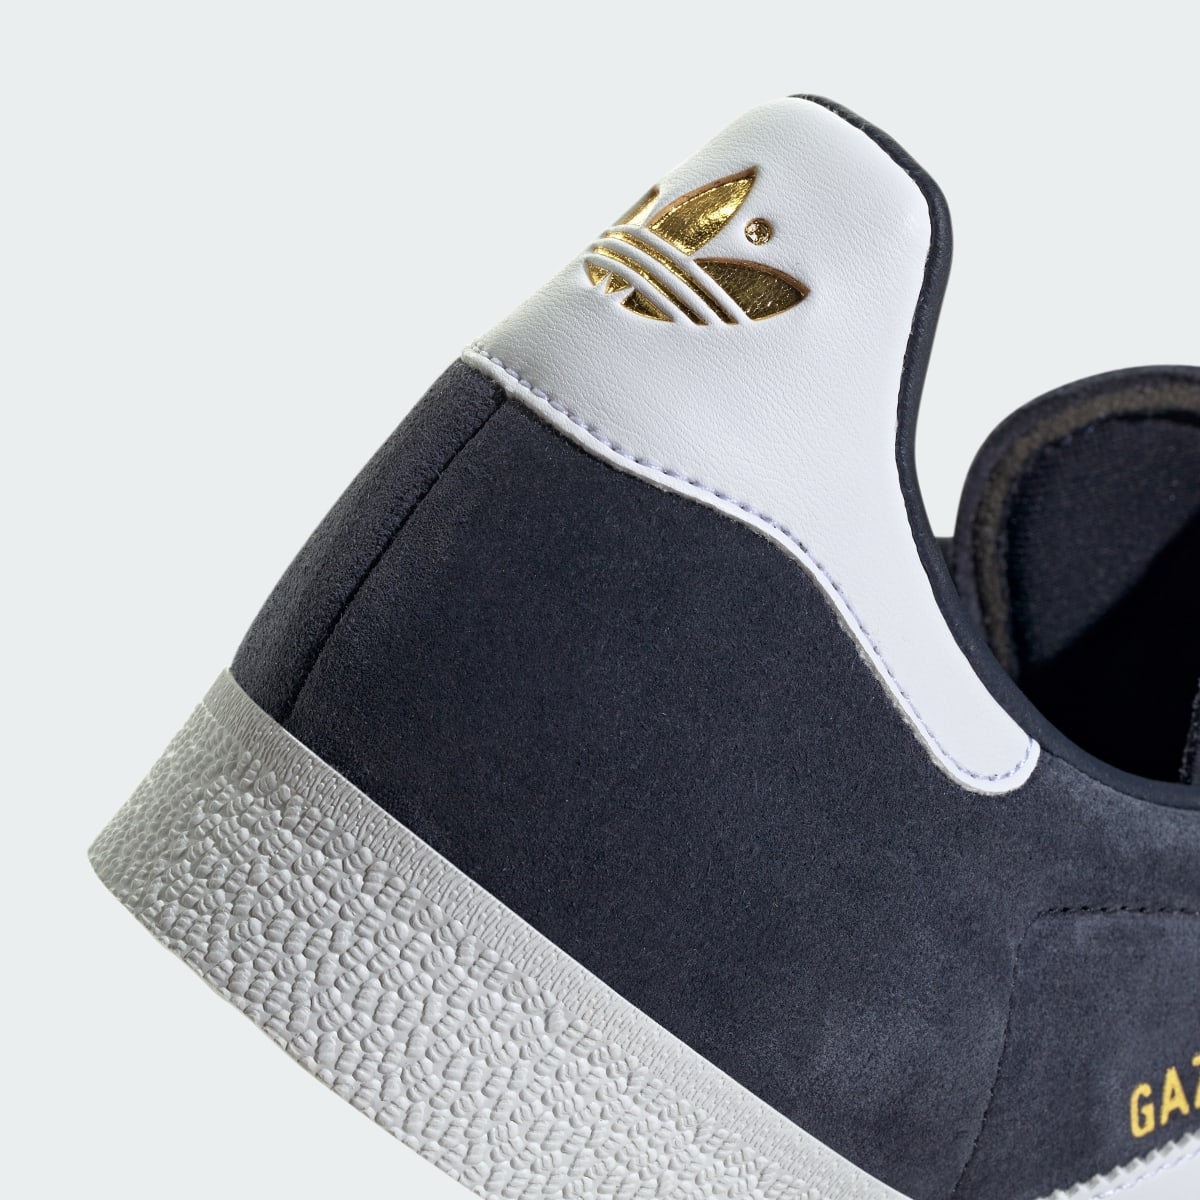 Adidas Gazelle Real Madrid Shoes. 10